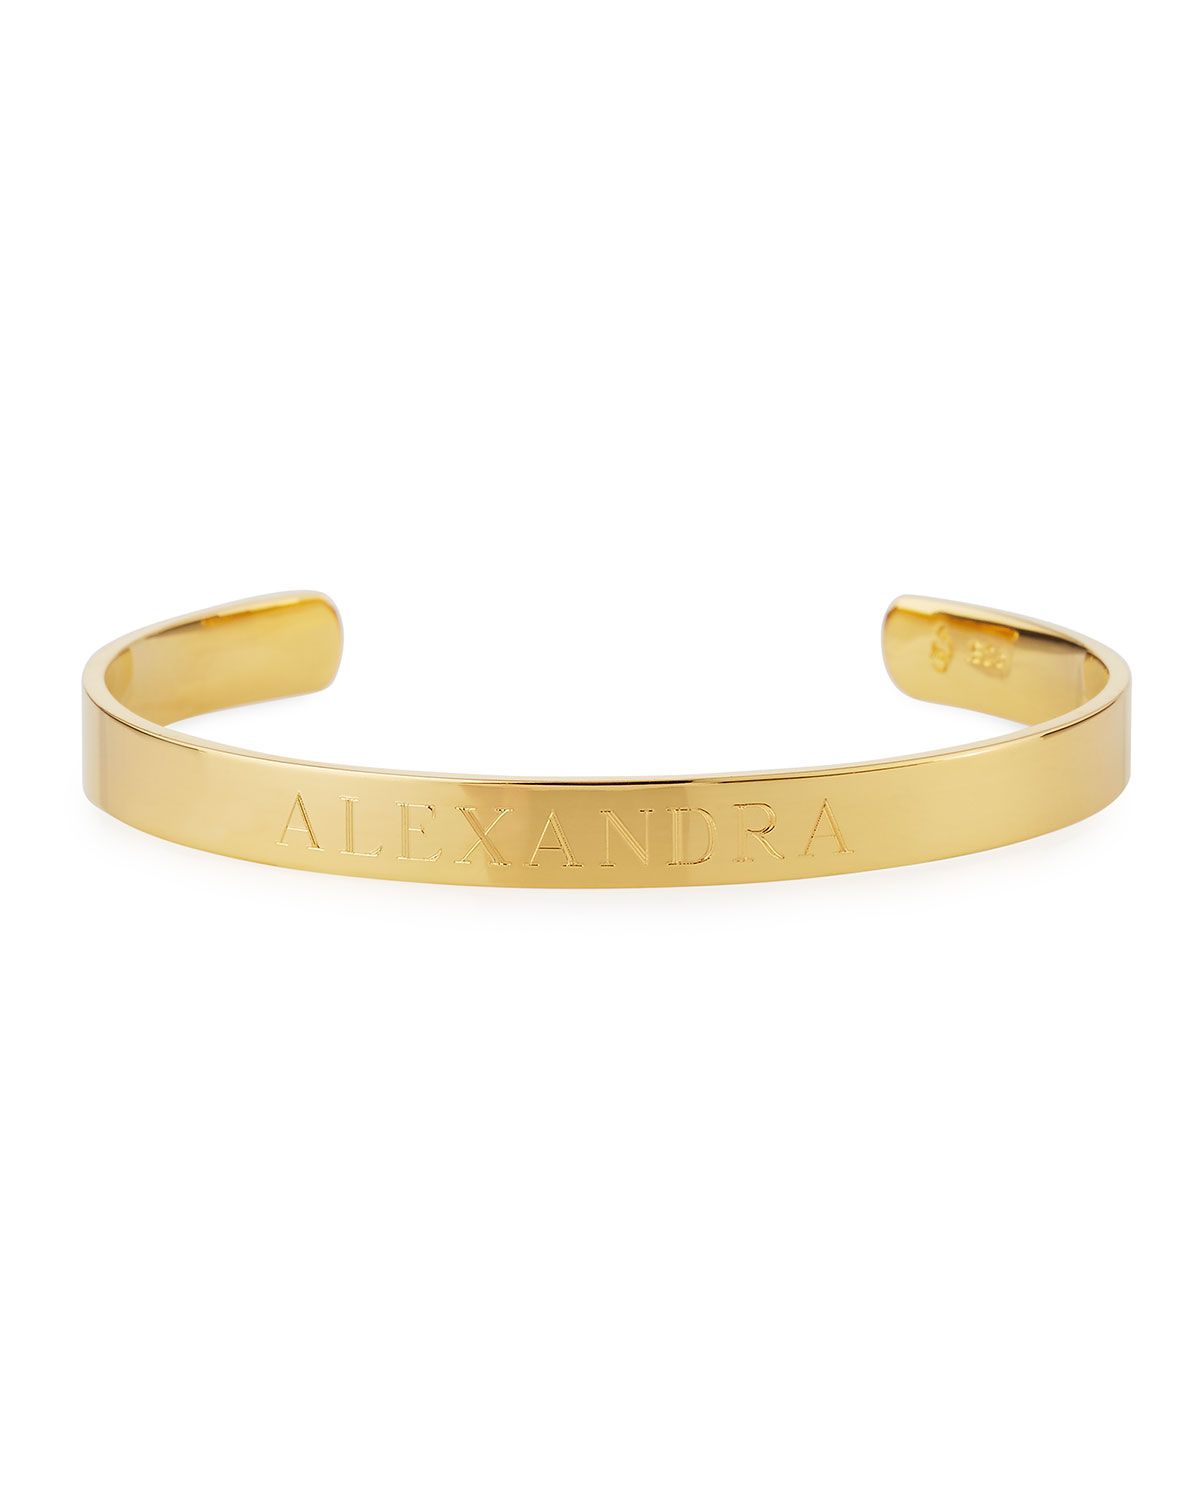 Ciela Personalized ID Bracelet, GoldCiela Personalized ID Bracelet, Silver | Neiman Marcus